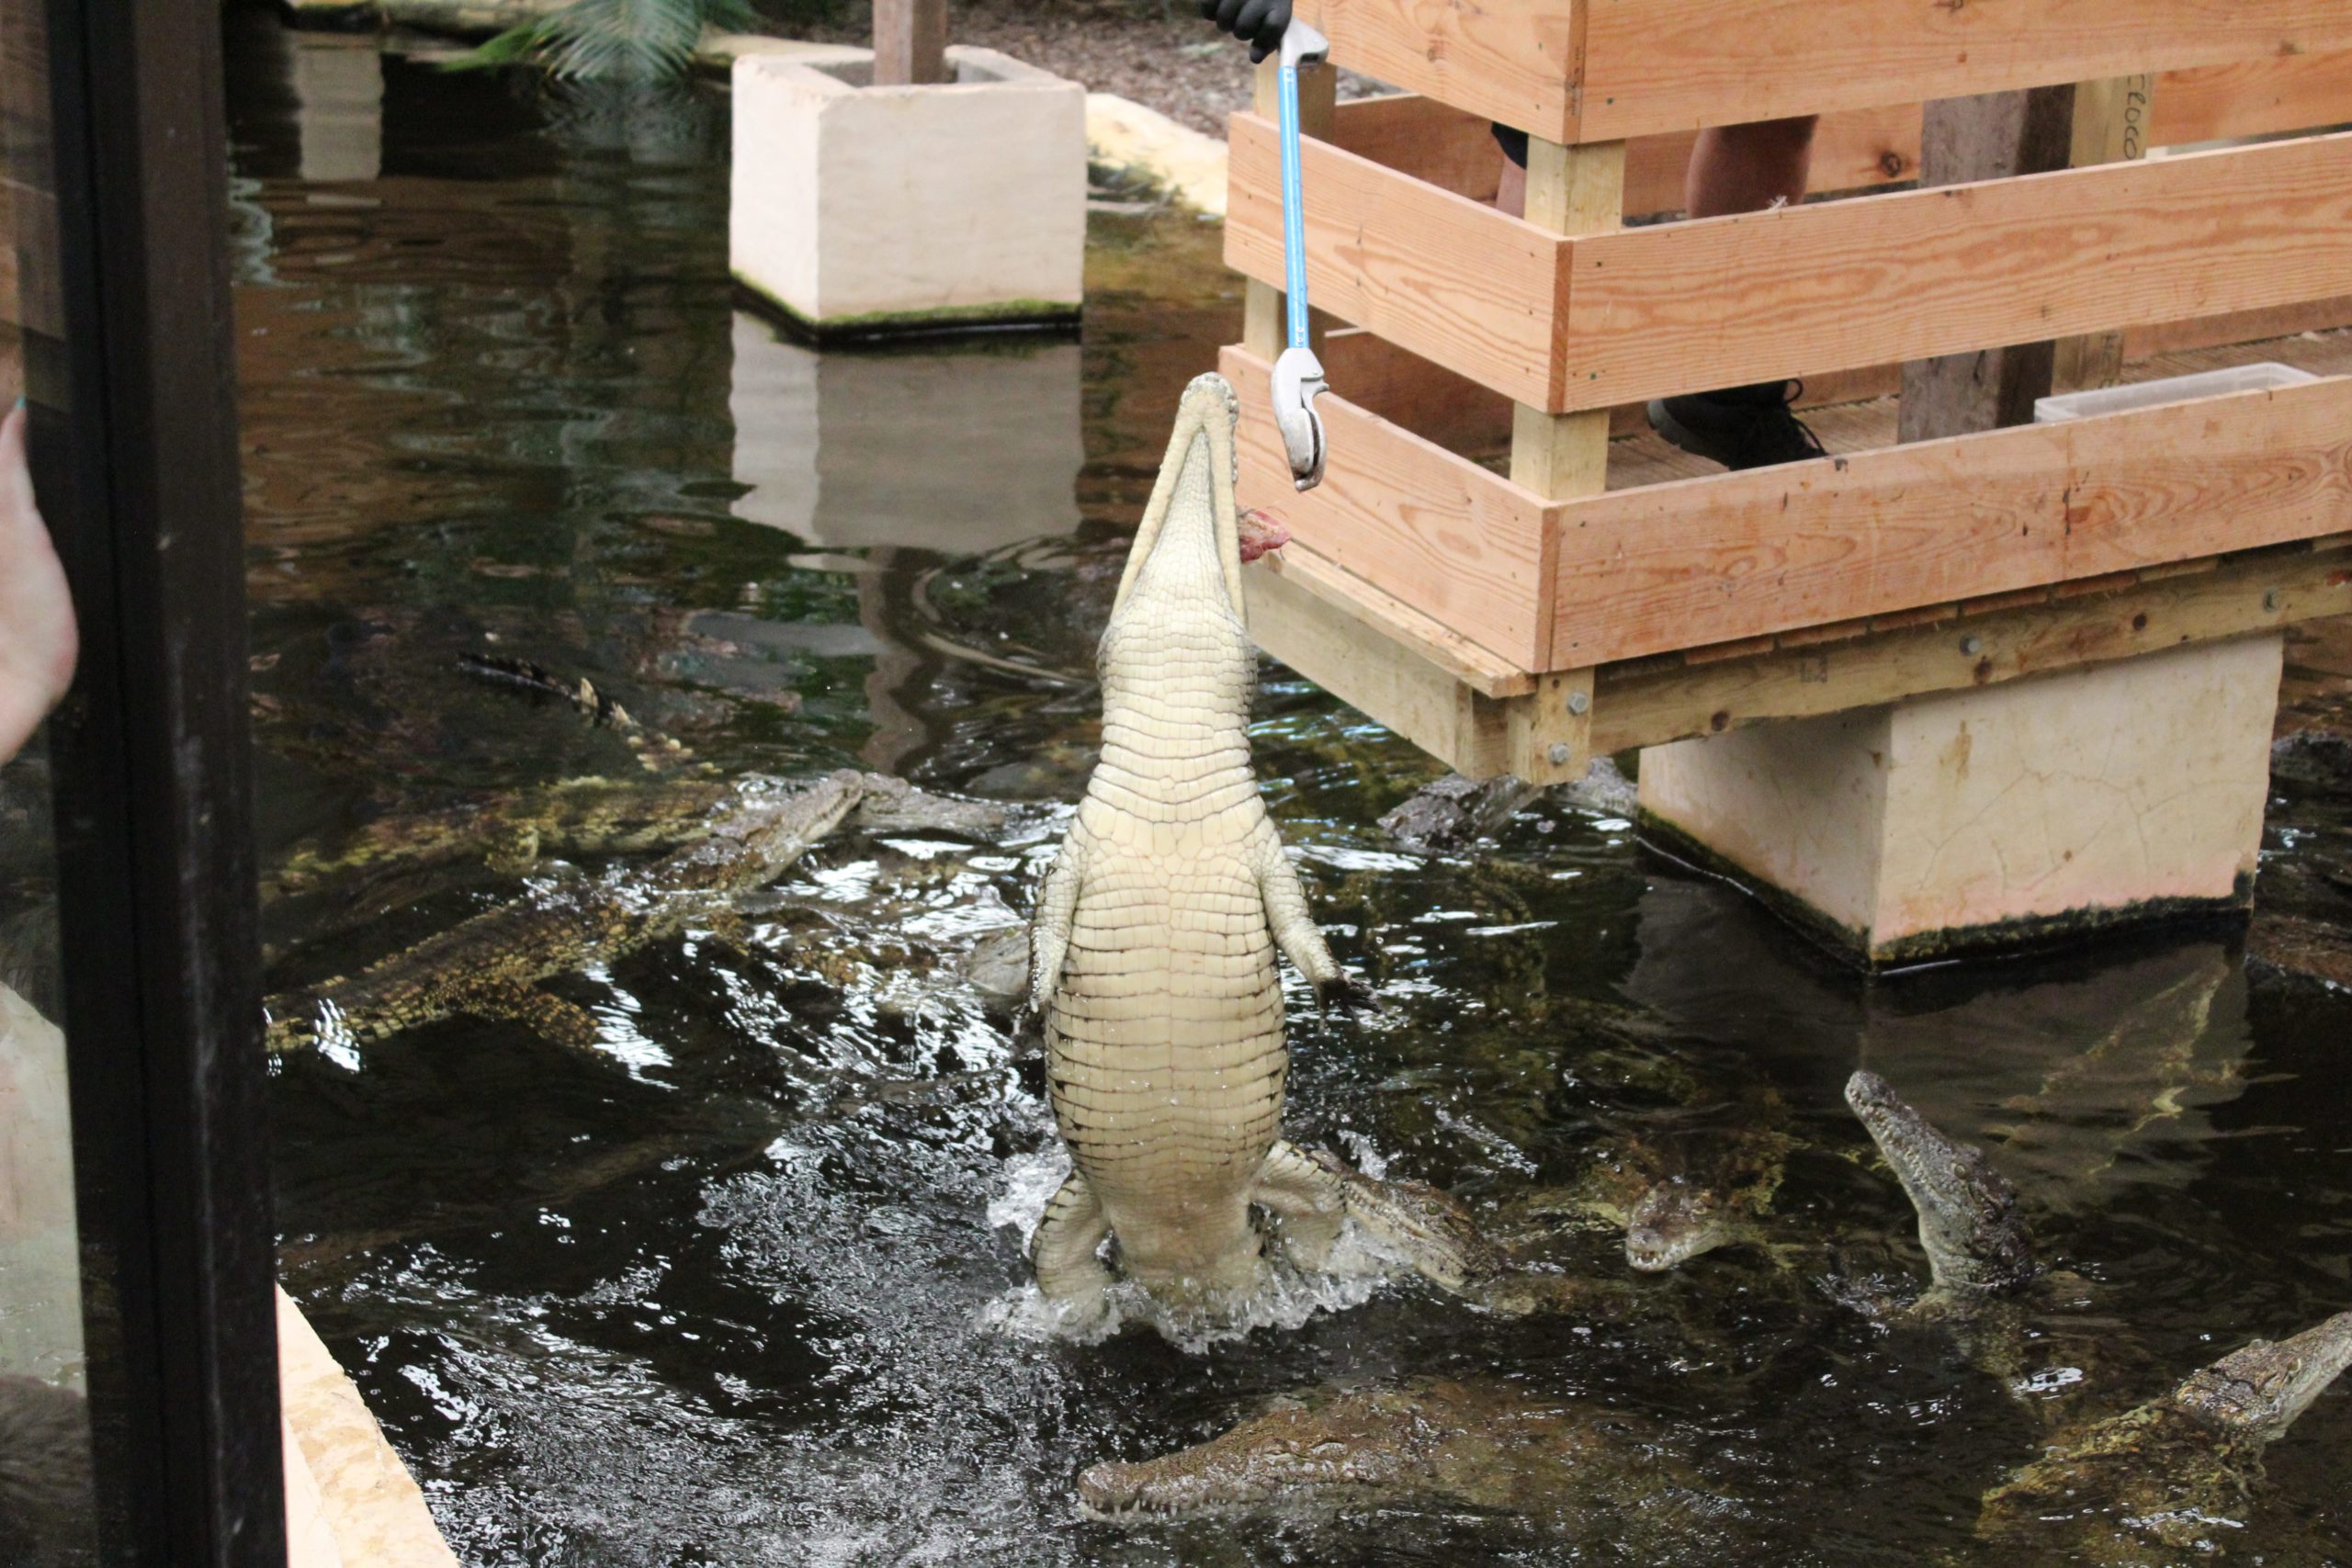 Nile Crocodile Feeding Experience